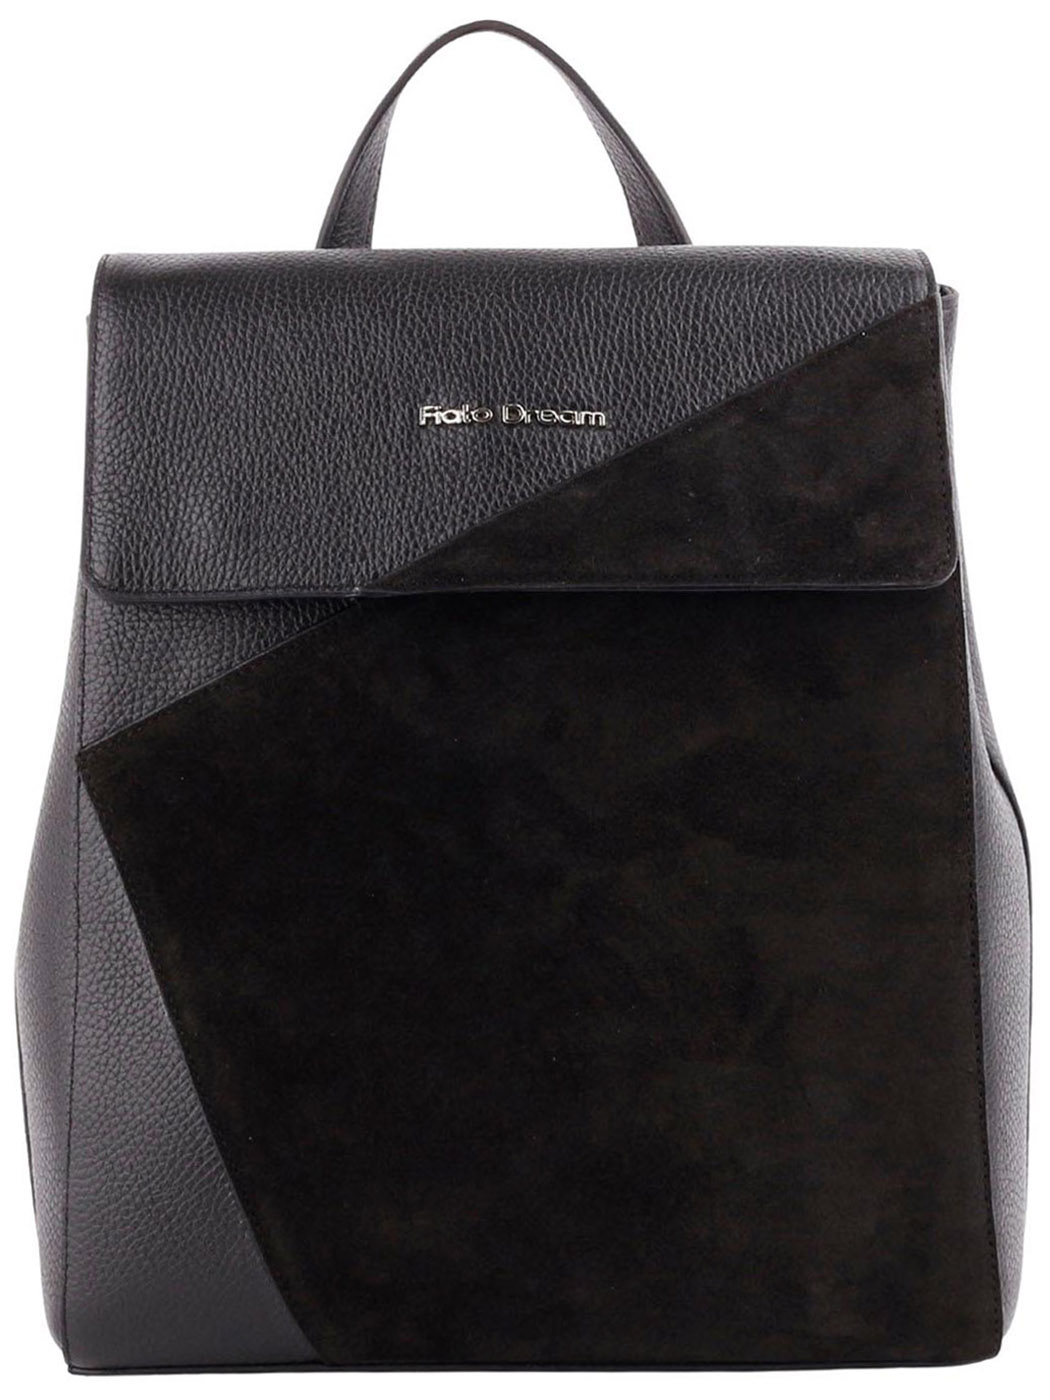 Рюкзак женский Fiato Dream 18070 черный, 32х27х12 см